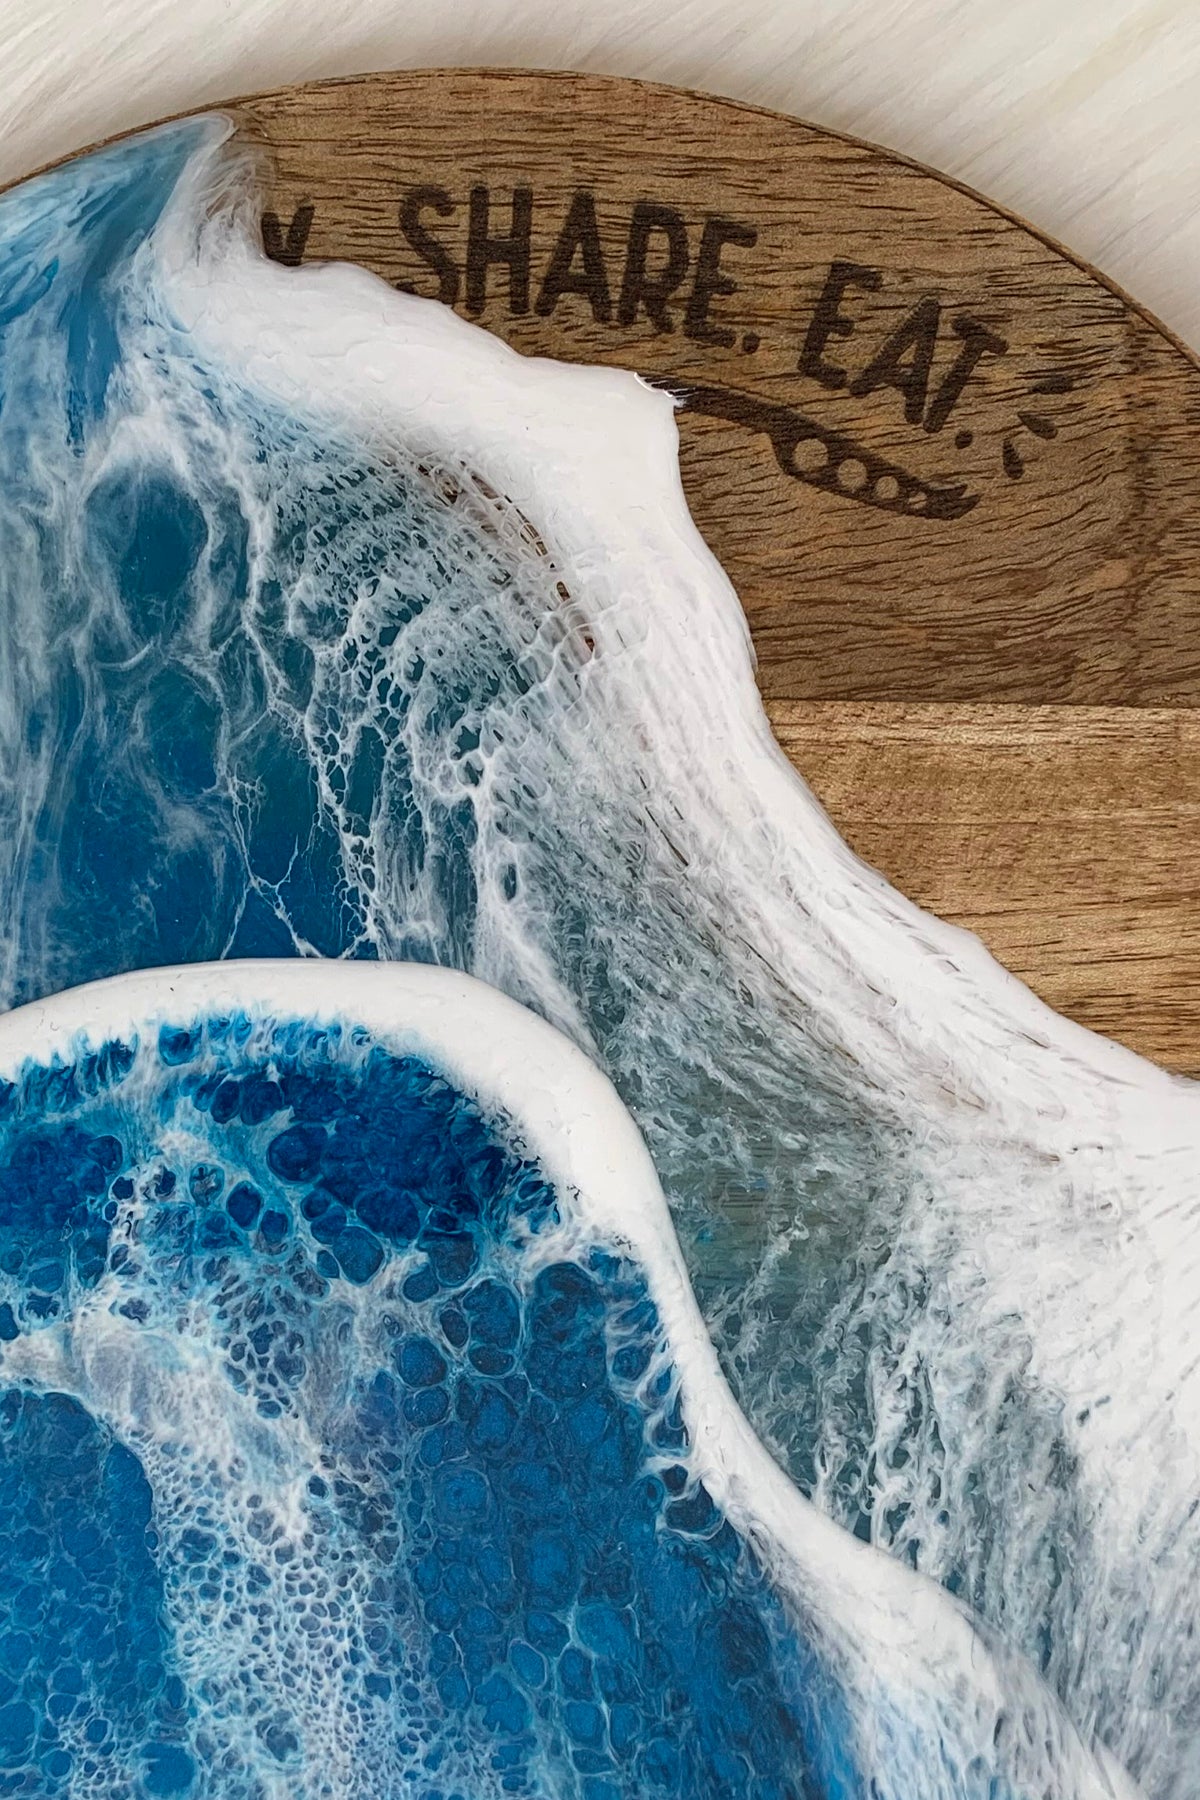 Ocean Board - ShopAuthentique